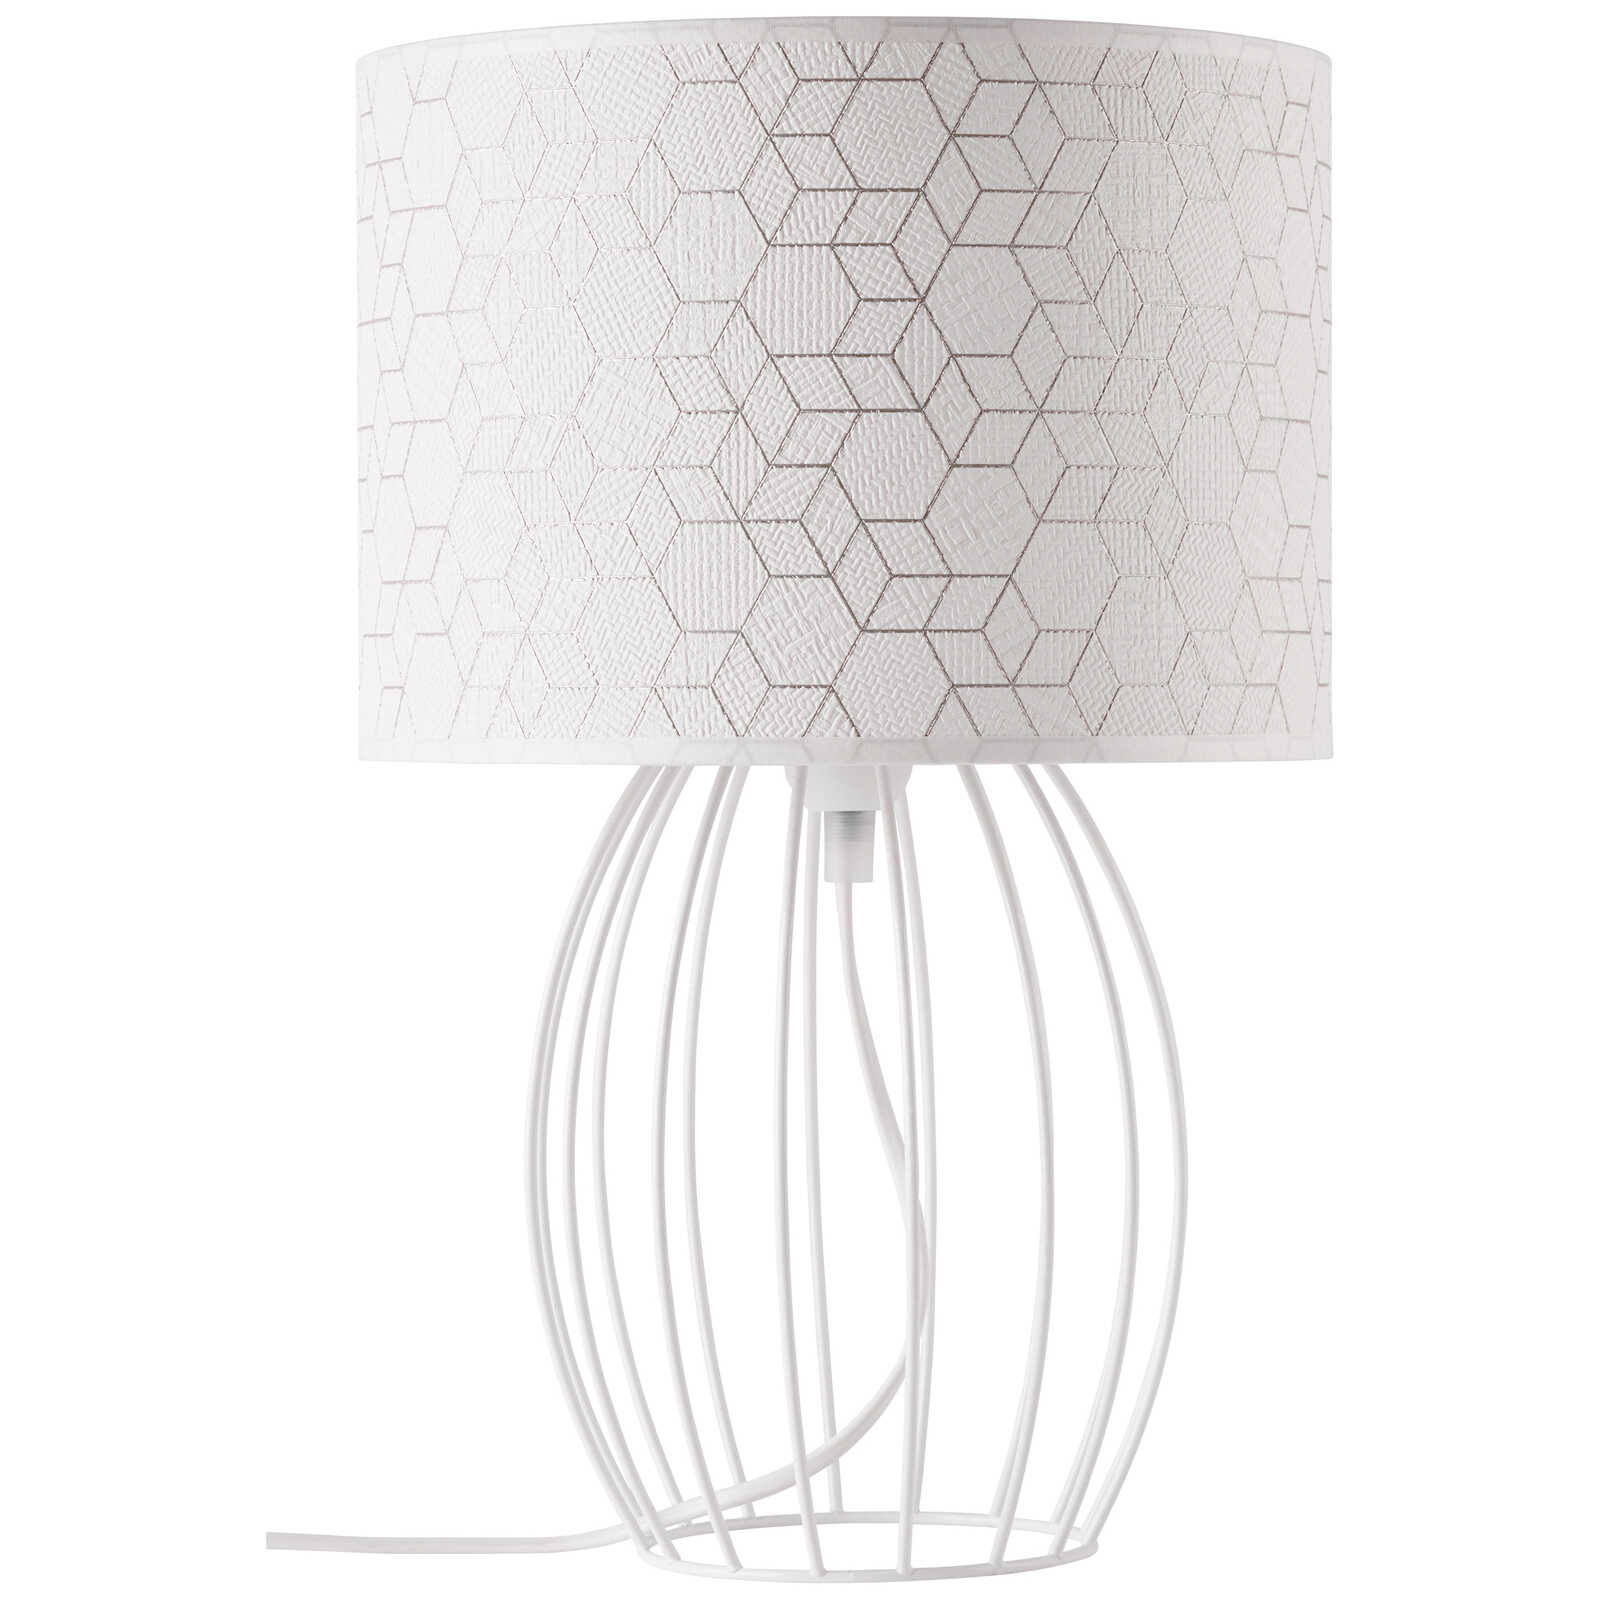             Textiel tafellamp - Hannes 1 - Wit
        